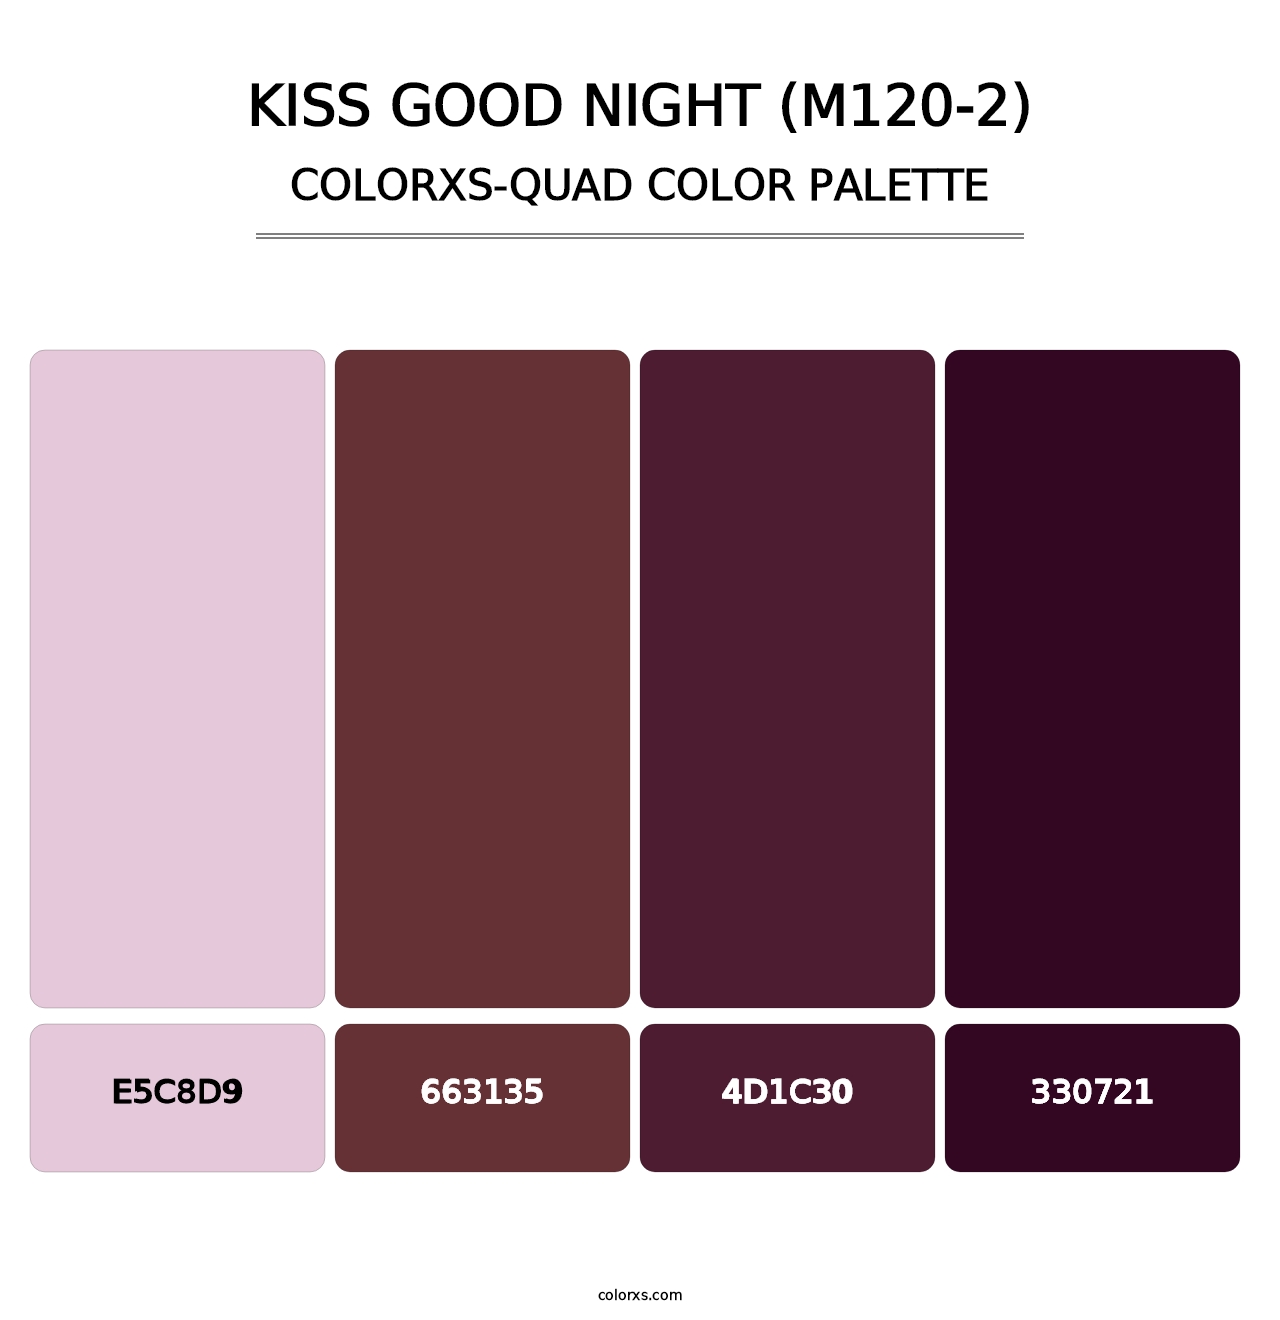 Kiss Good Night (M120-2) - Colorxs Quad Palette